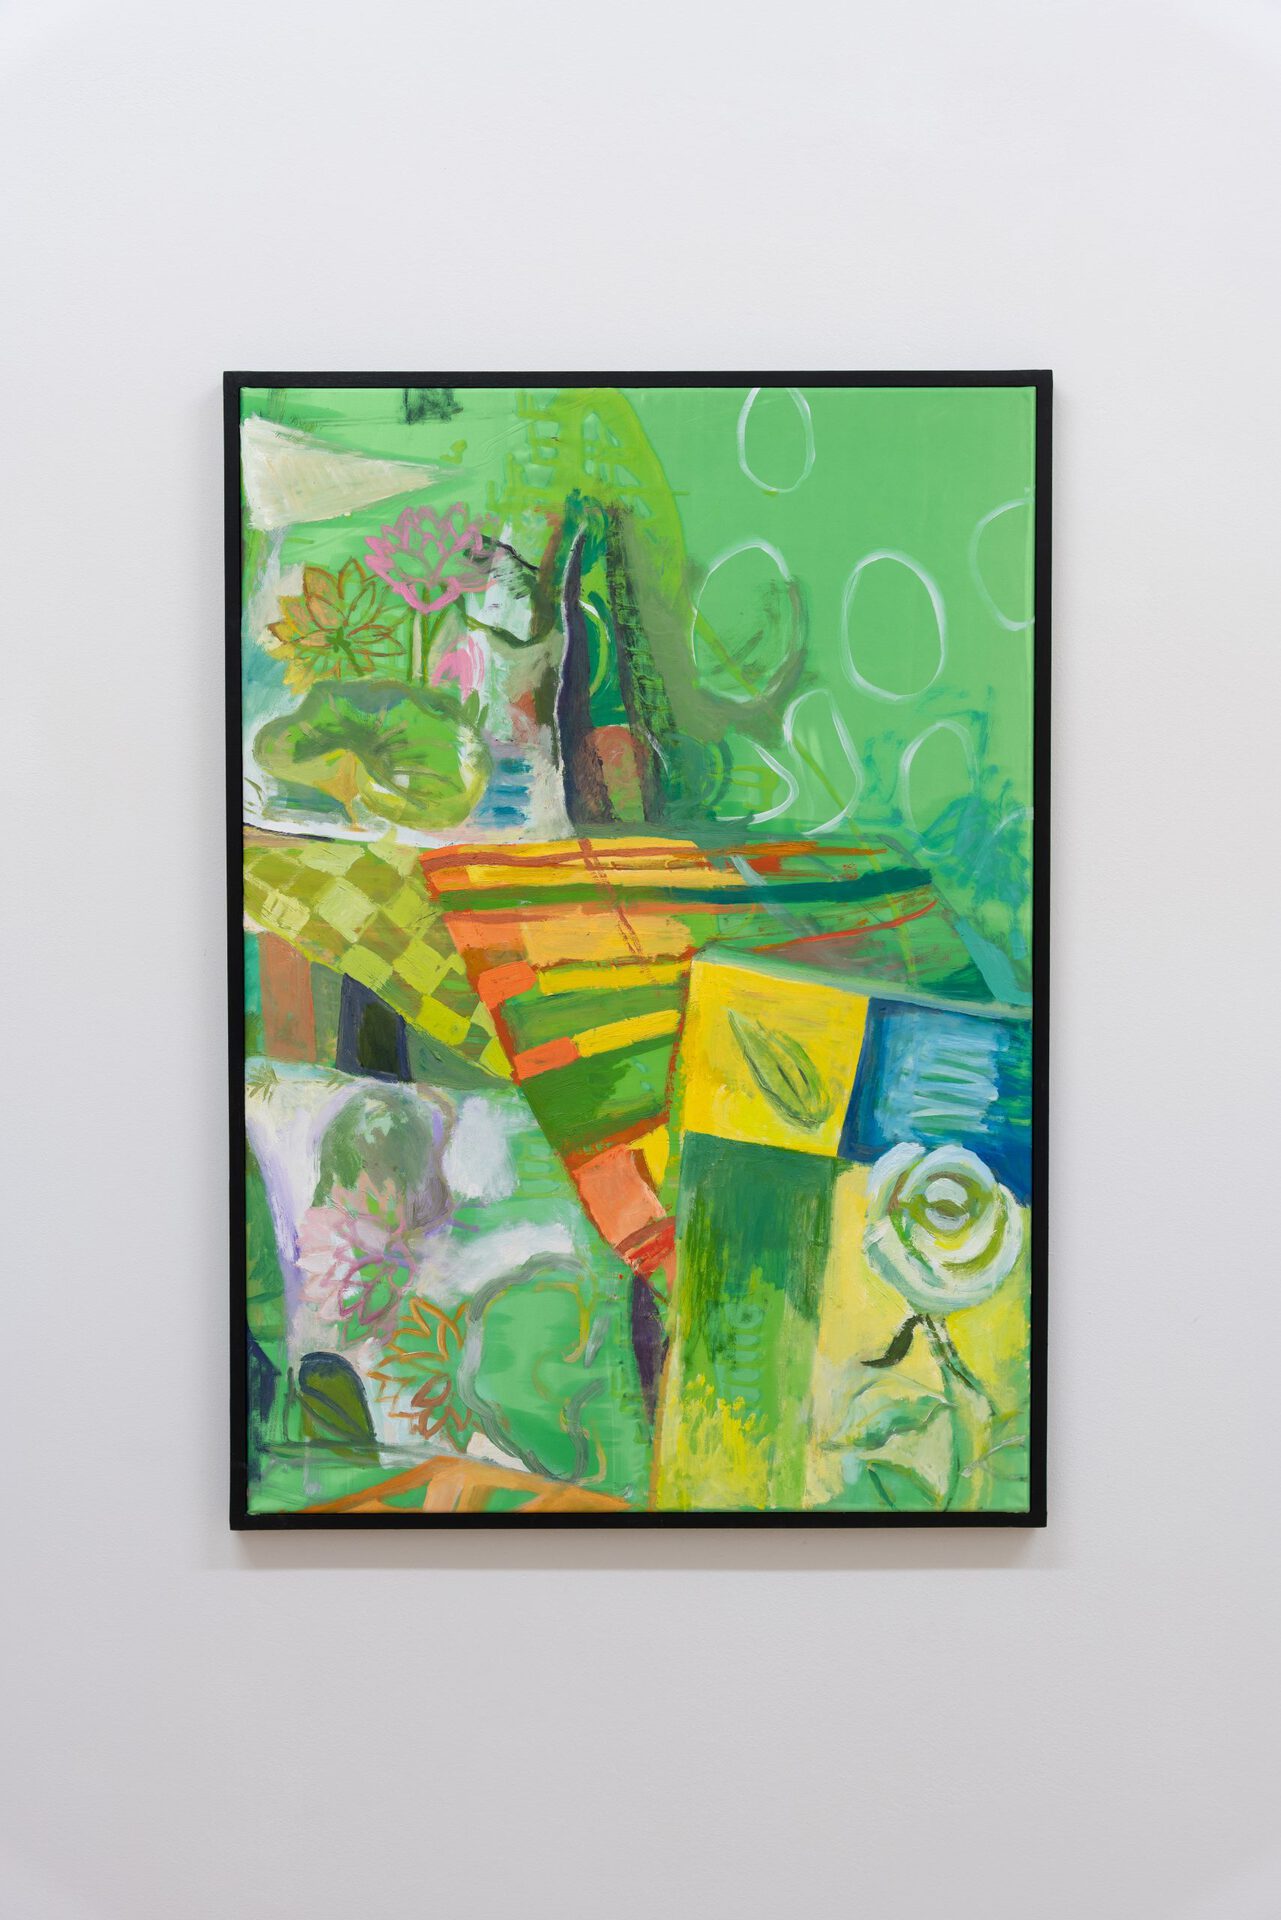 Anne Fellner, Window Studies 4, 2021, Oil and enamel on synthetic textile, 73cm x 102cm